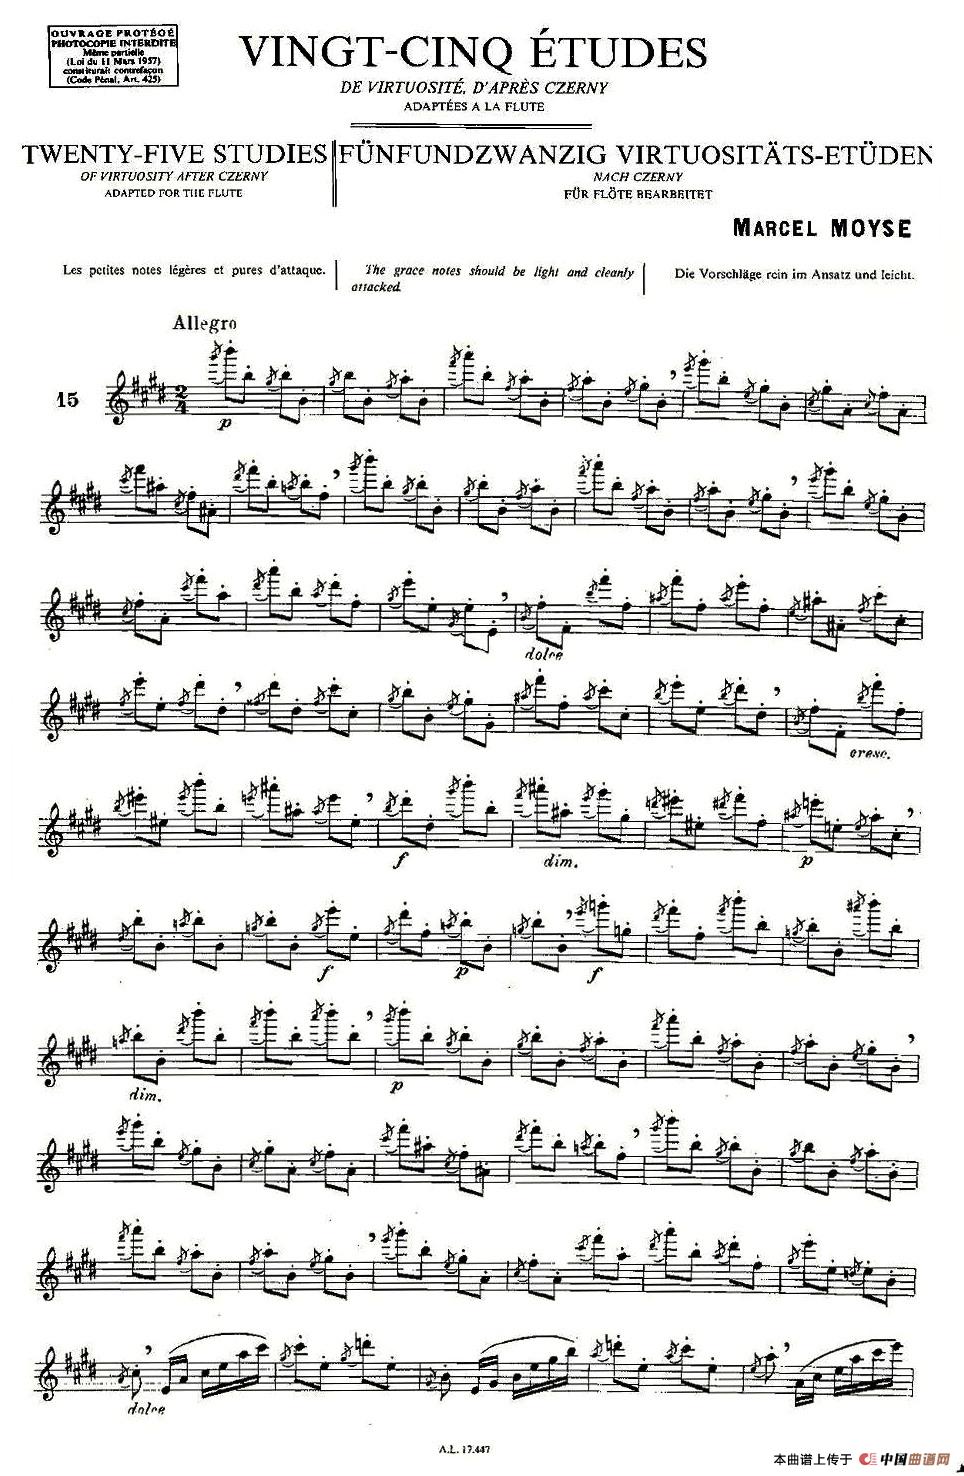 Moyse - 25 Studies after Czerny flute 之15（25首改编自车